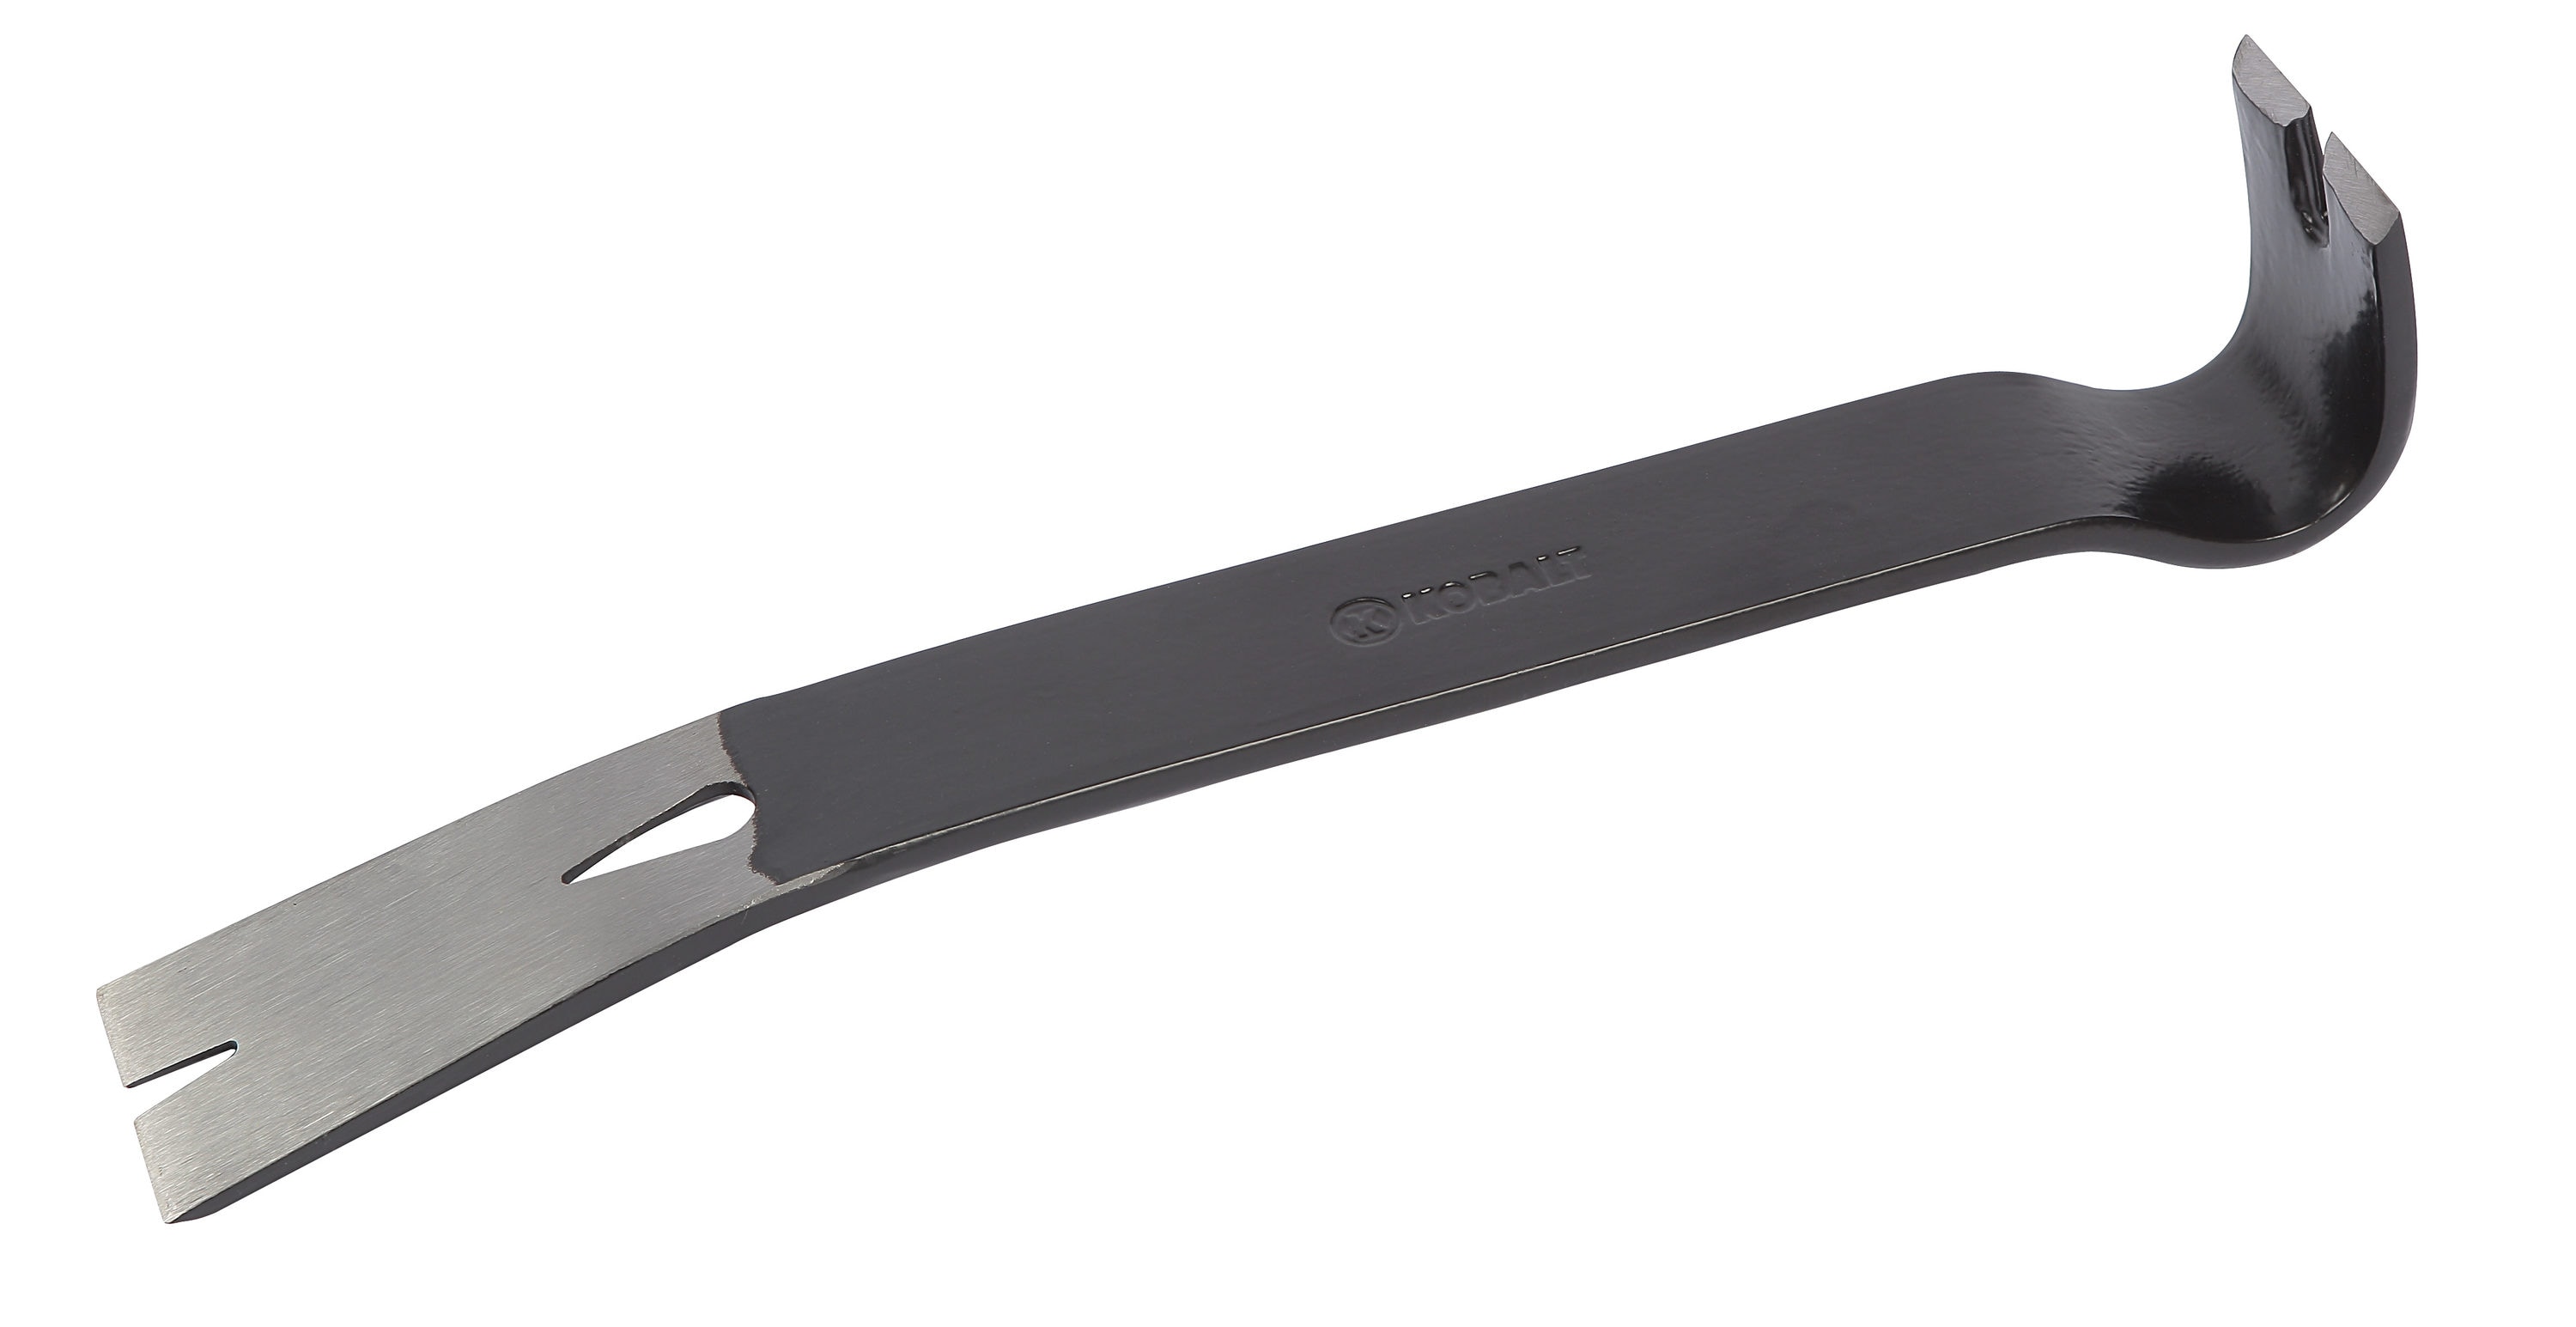 Mini Prybar Crow bar Multi Tool Lightweight High Strength Heat Treated Steel 